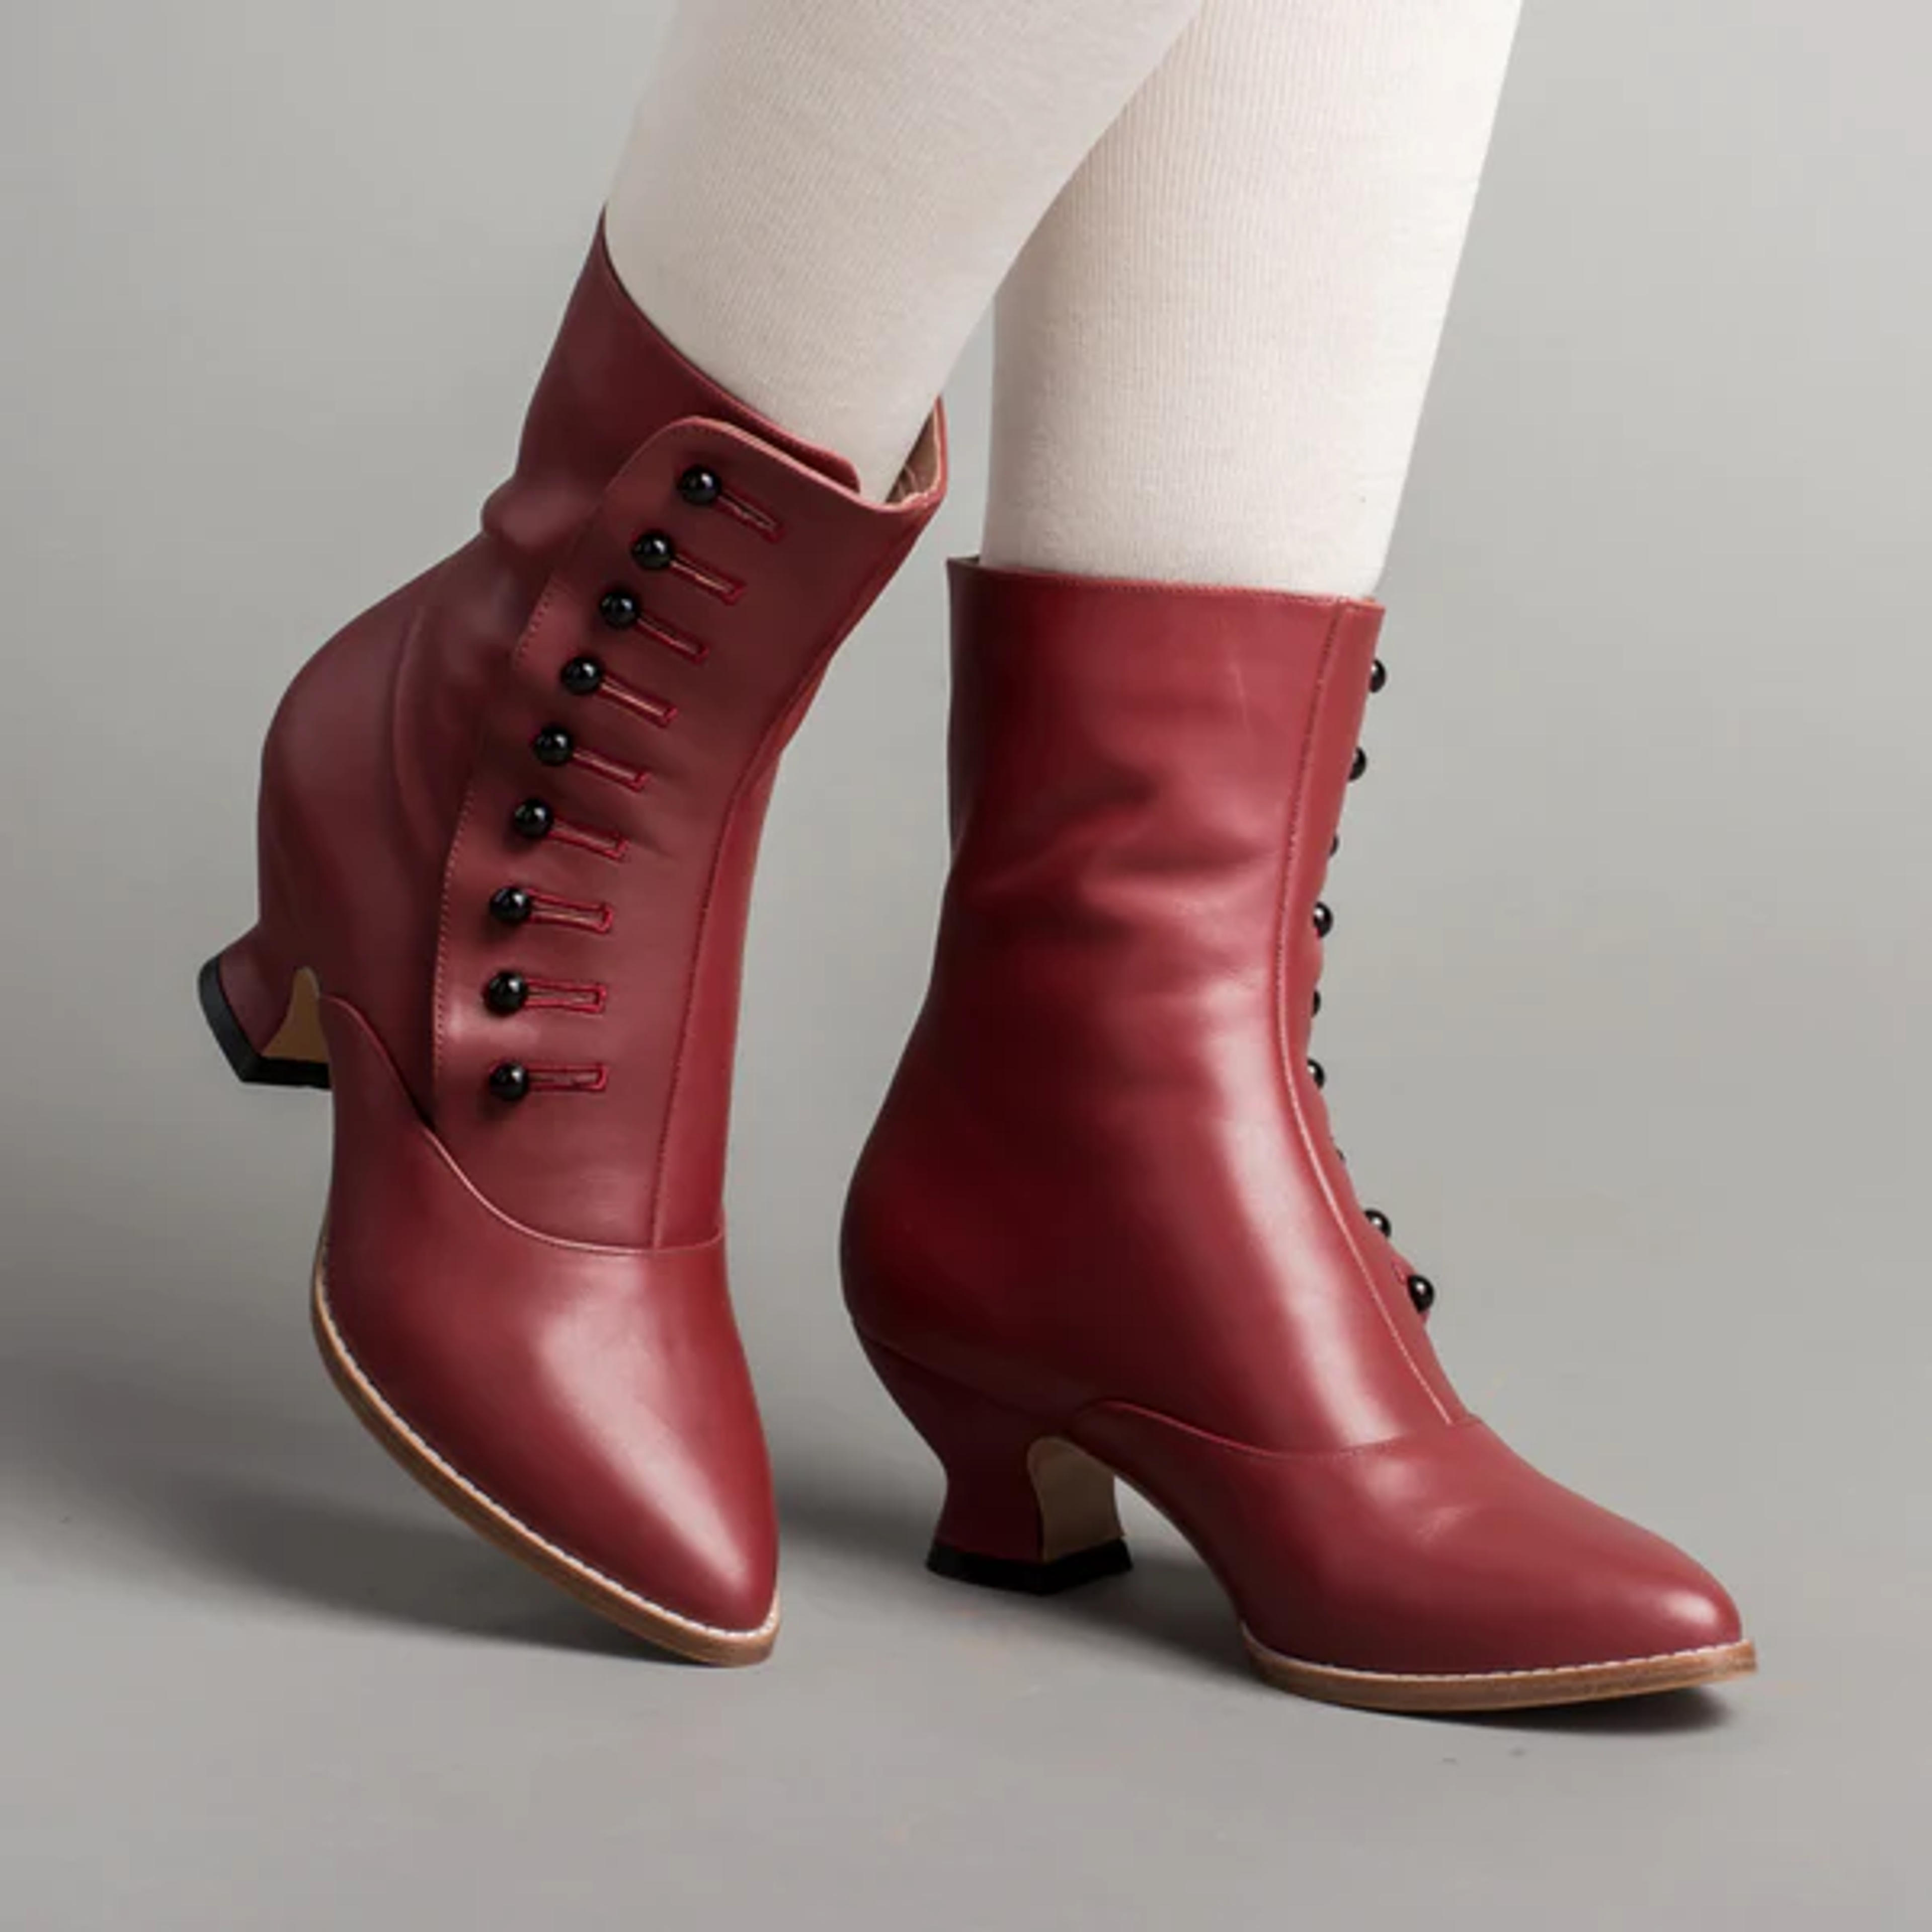 Tavistock Women's Victorian Button Boots (Oxblood)